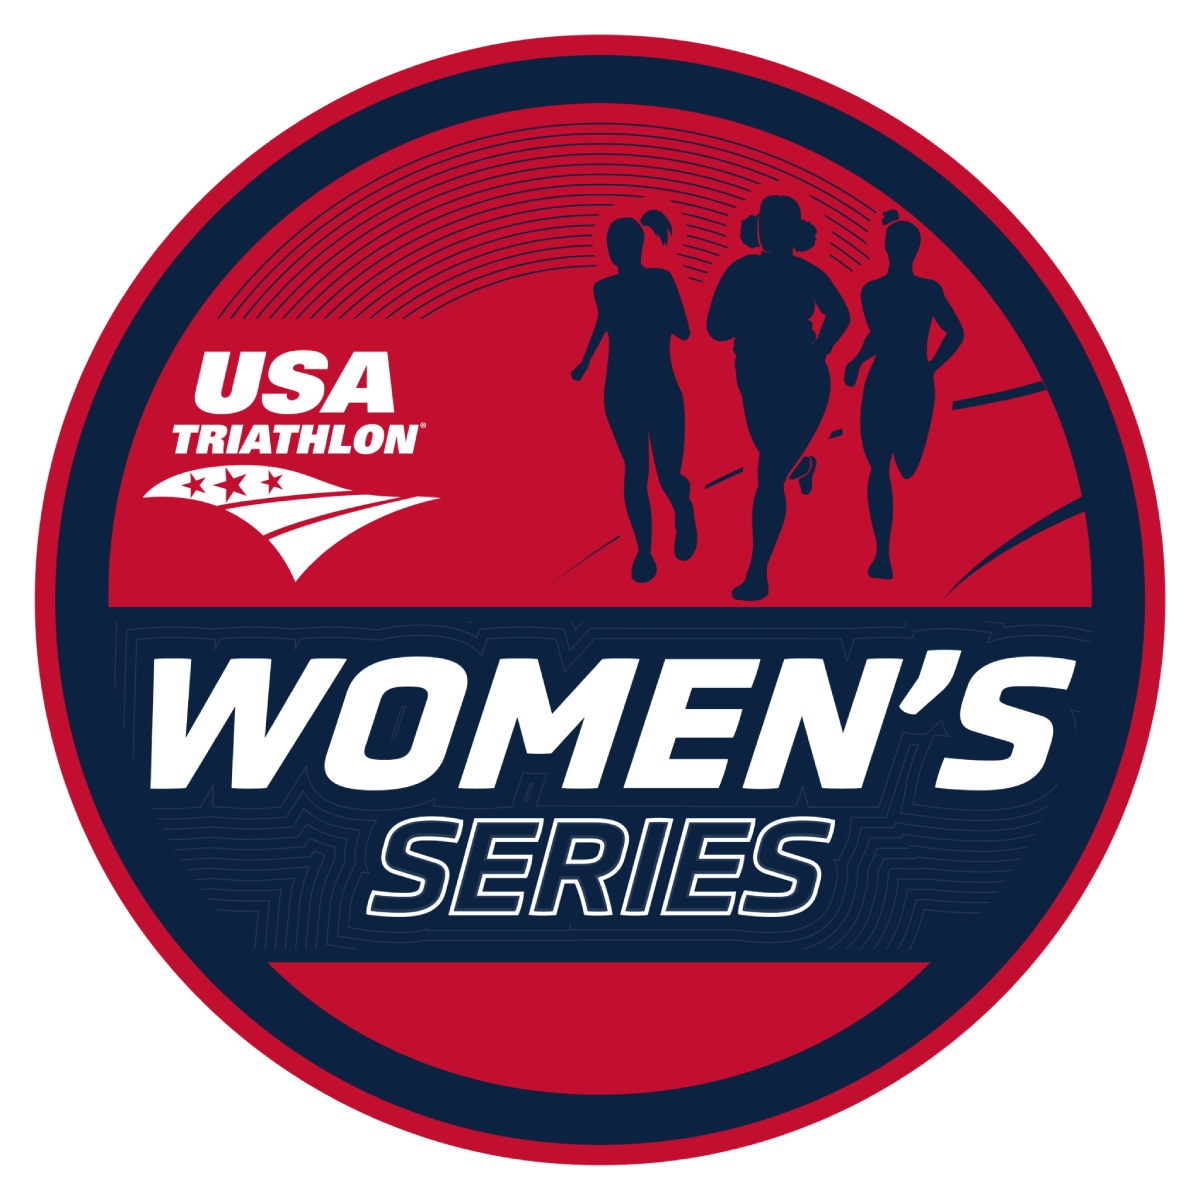 the logo for the usa triathlon women 's series